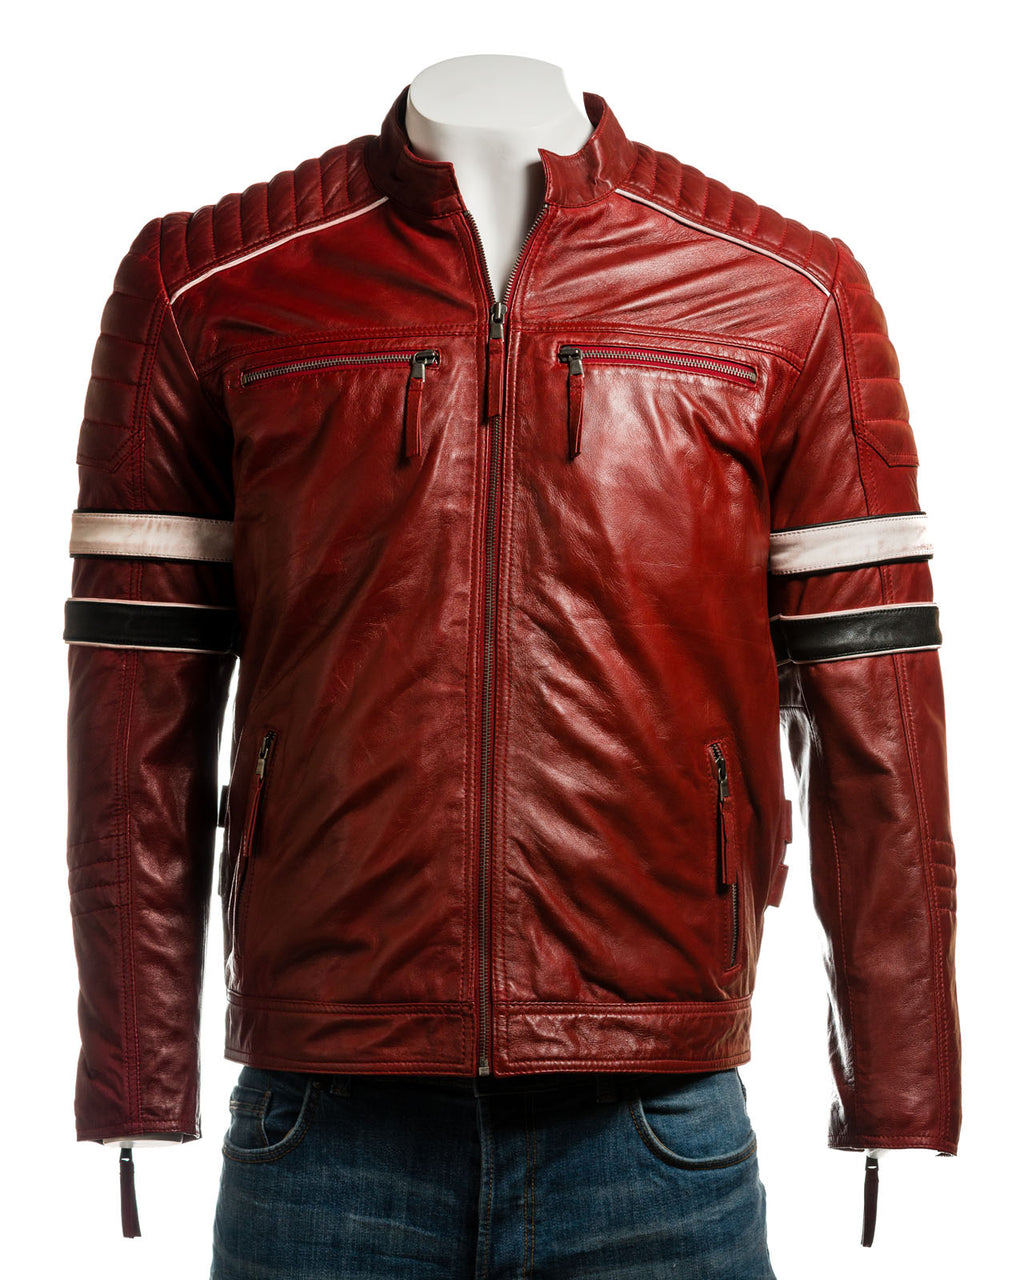 Men's Racing Biker Style Leather Jacket: Benito